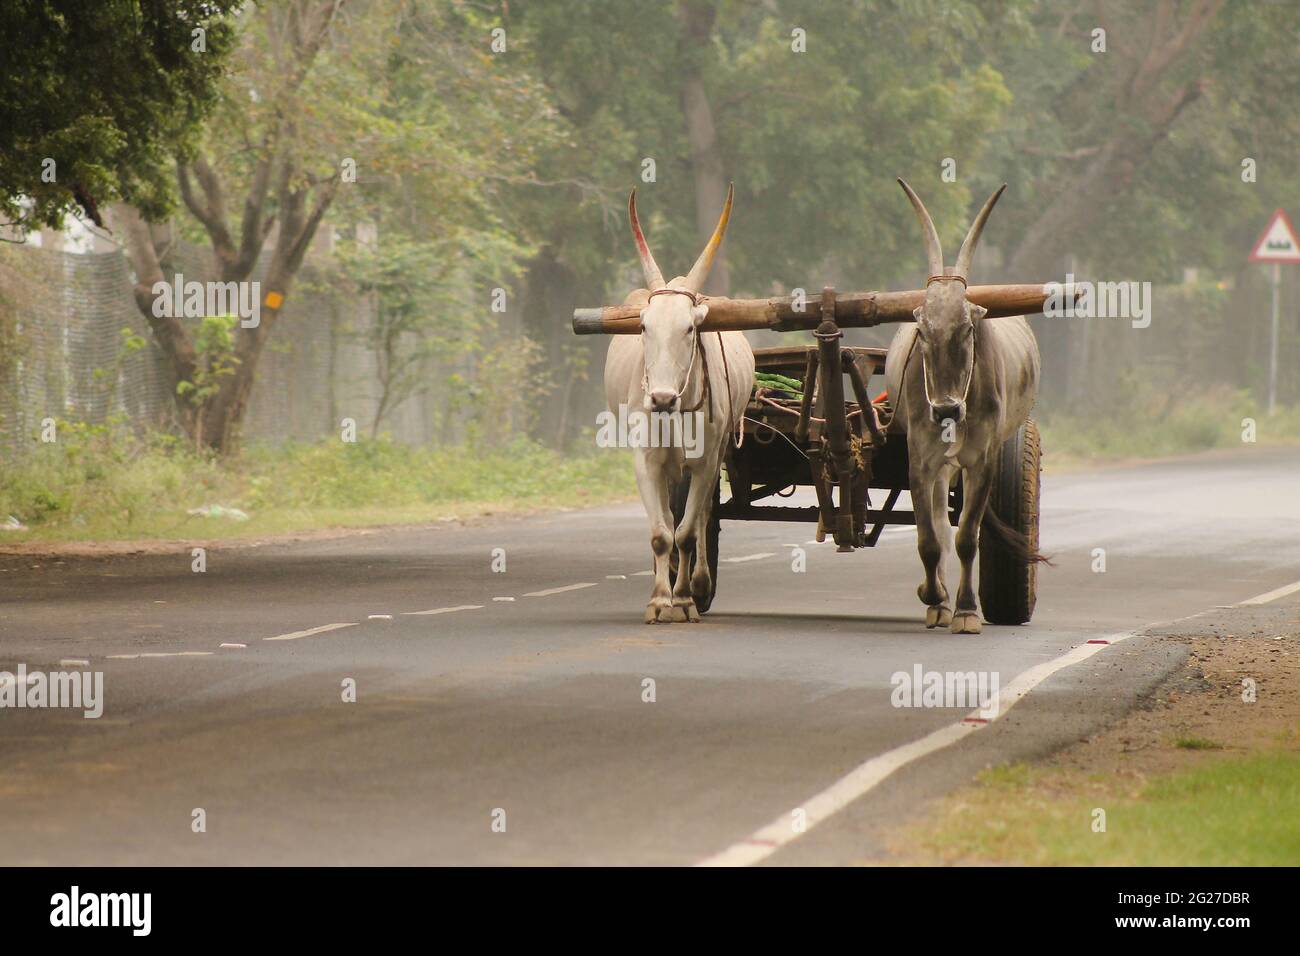 Bullock cart in Indian village road Stock Photo